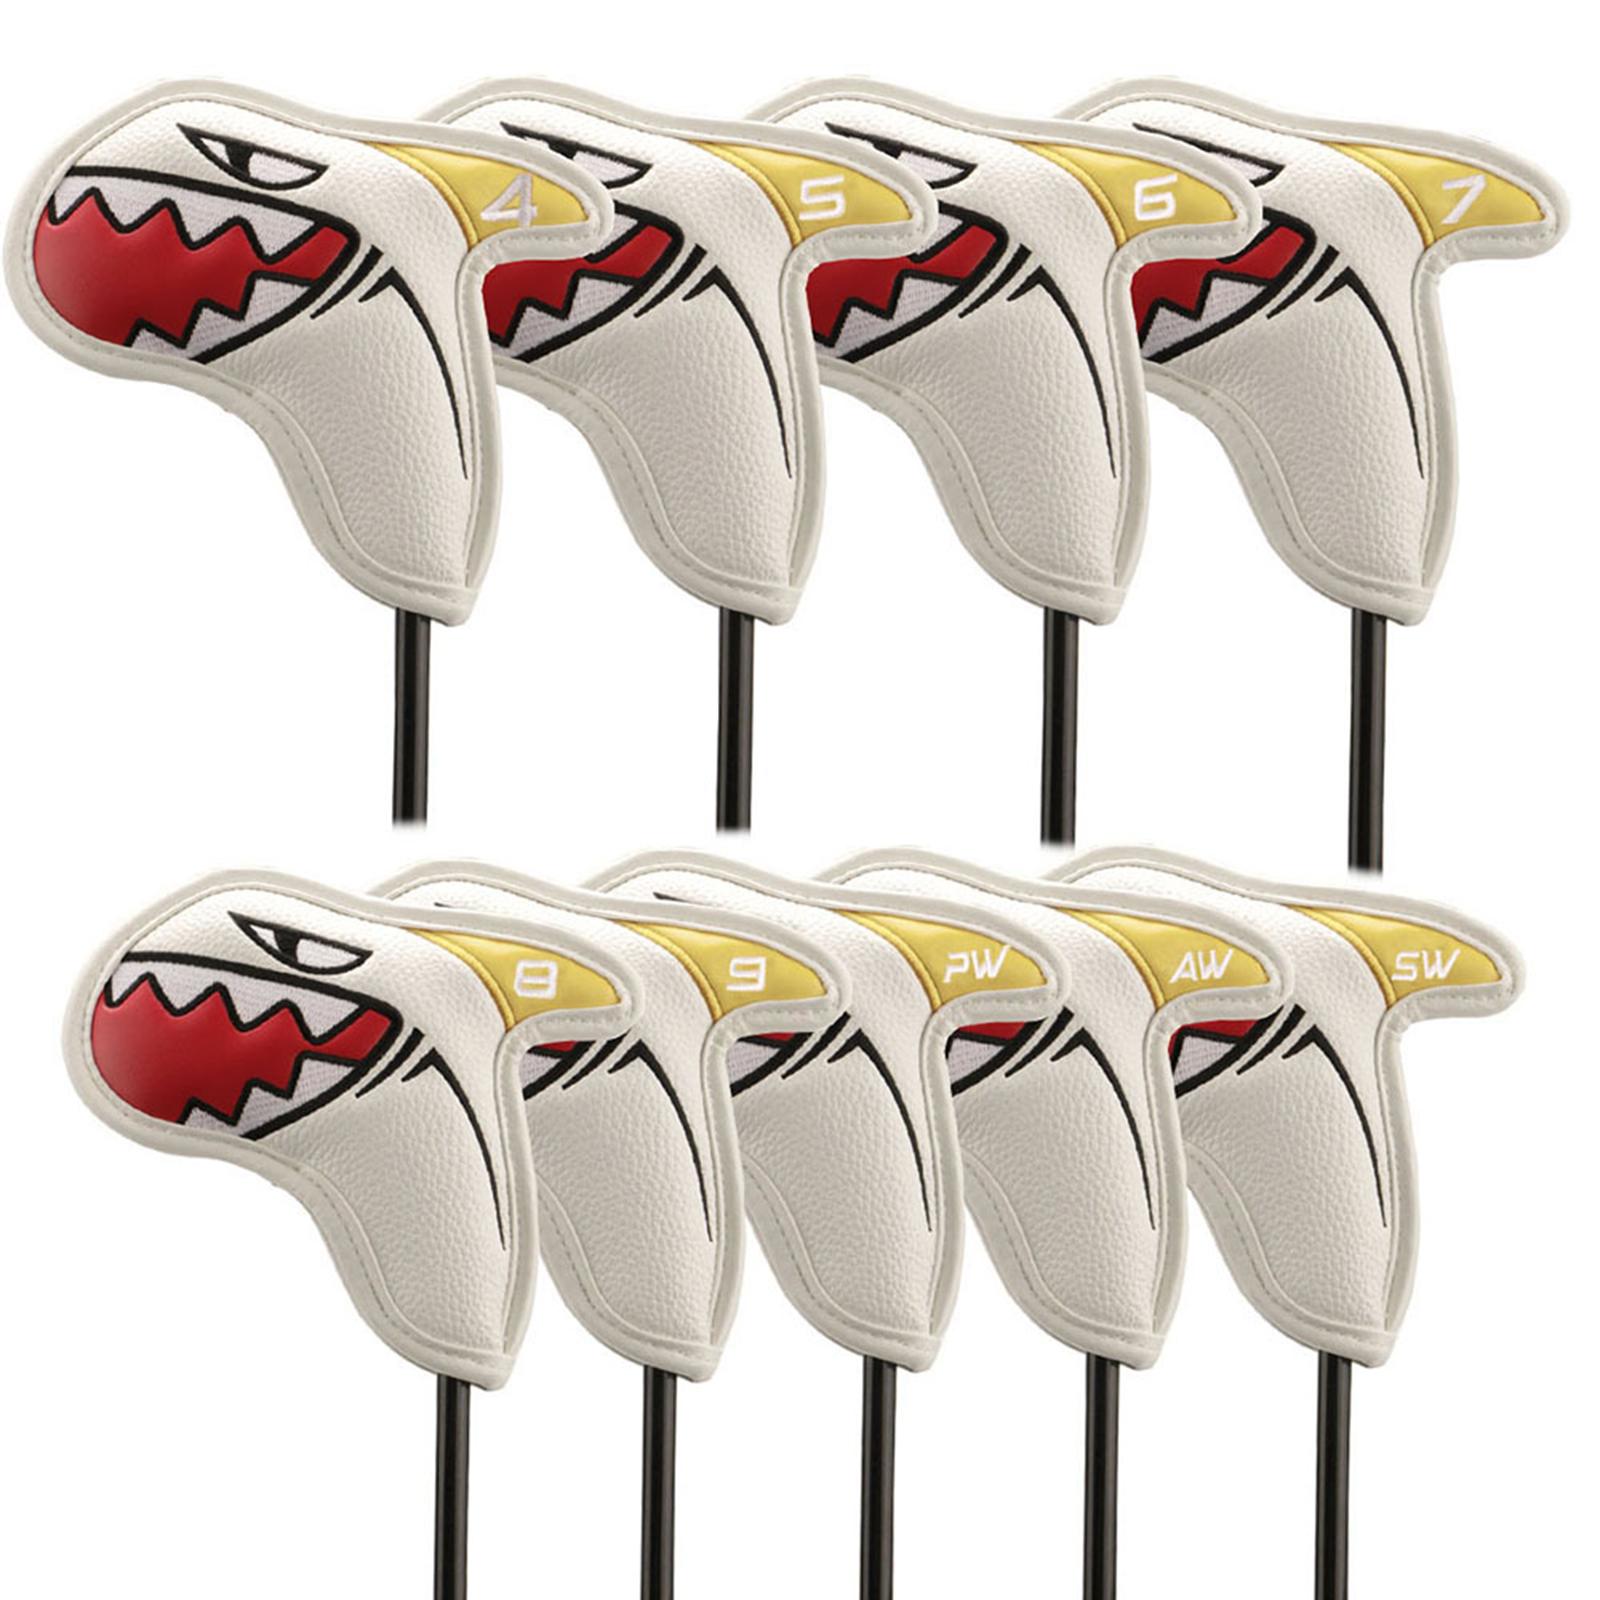 9x Shark Golf Iron Head Covers Leather PU Golf Club Headcovers